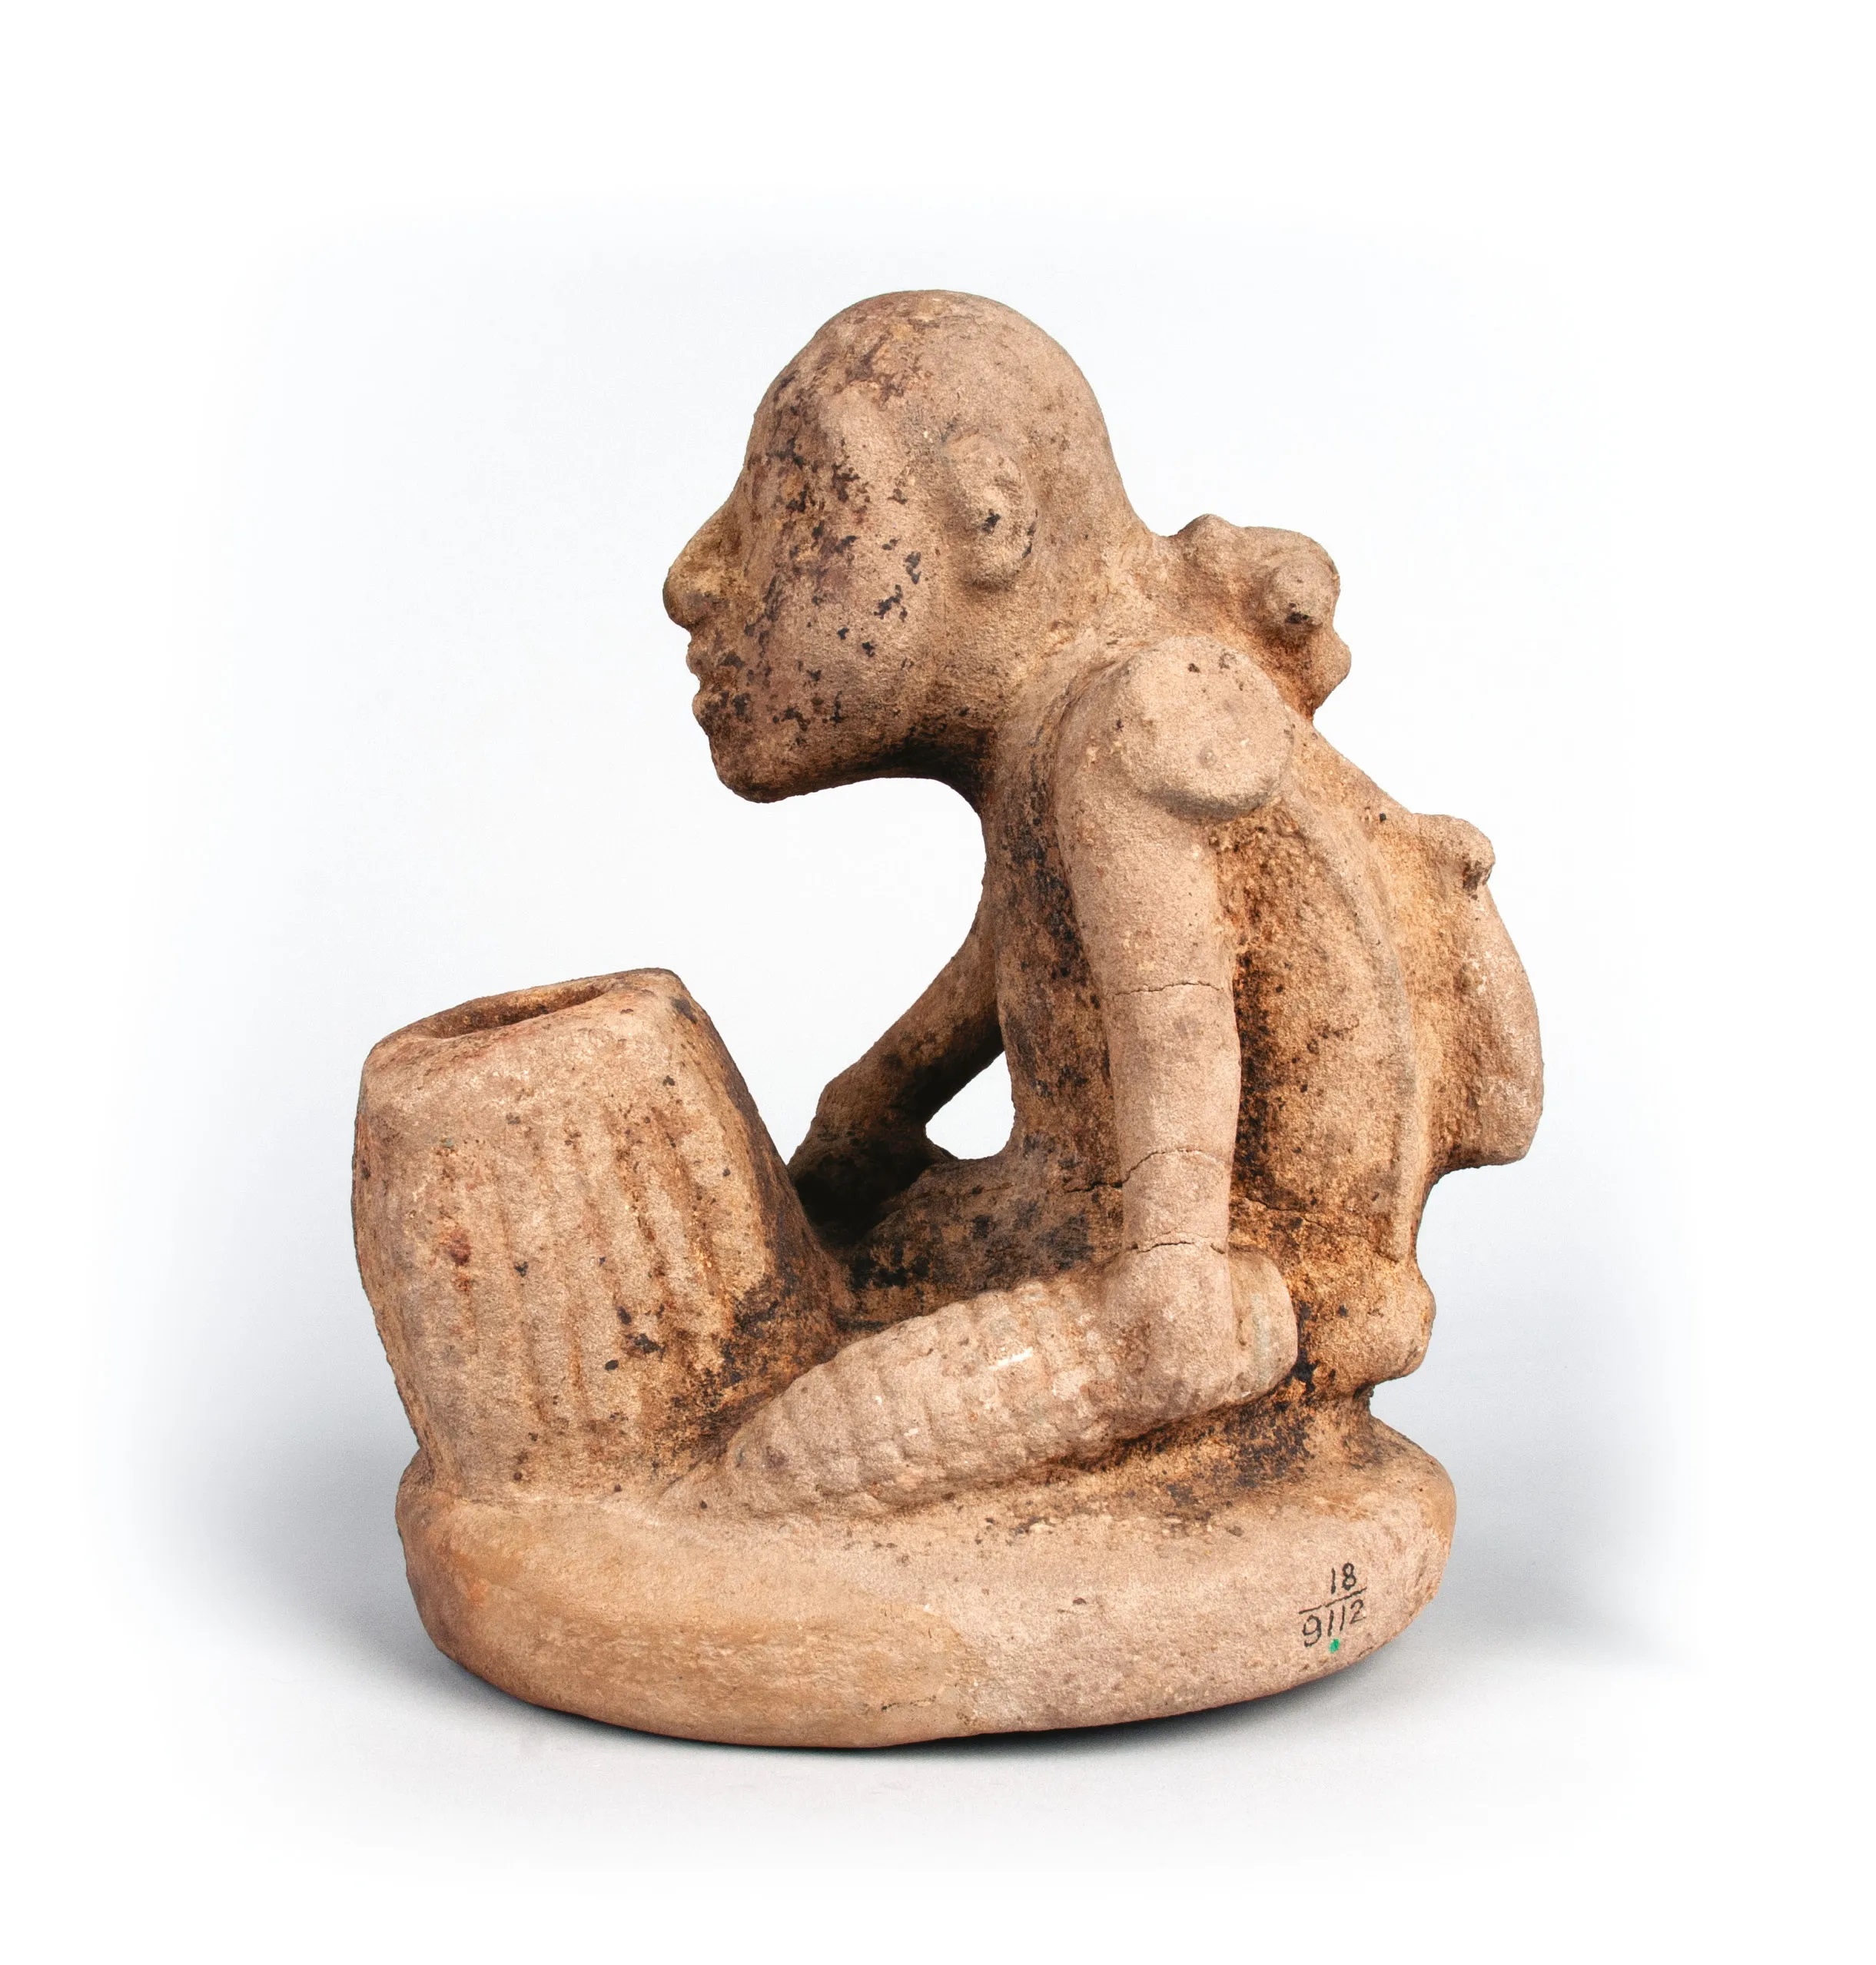 Stone effigy pipe shaped like Earthmother holding corn